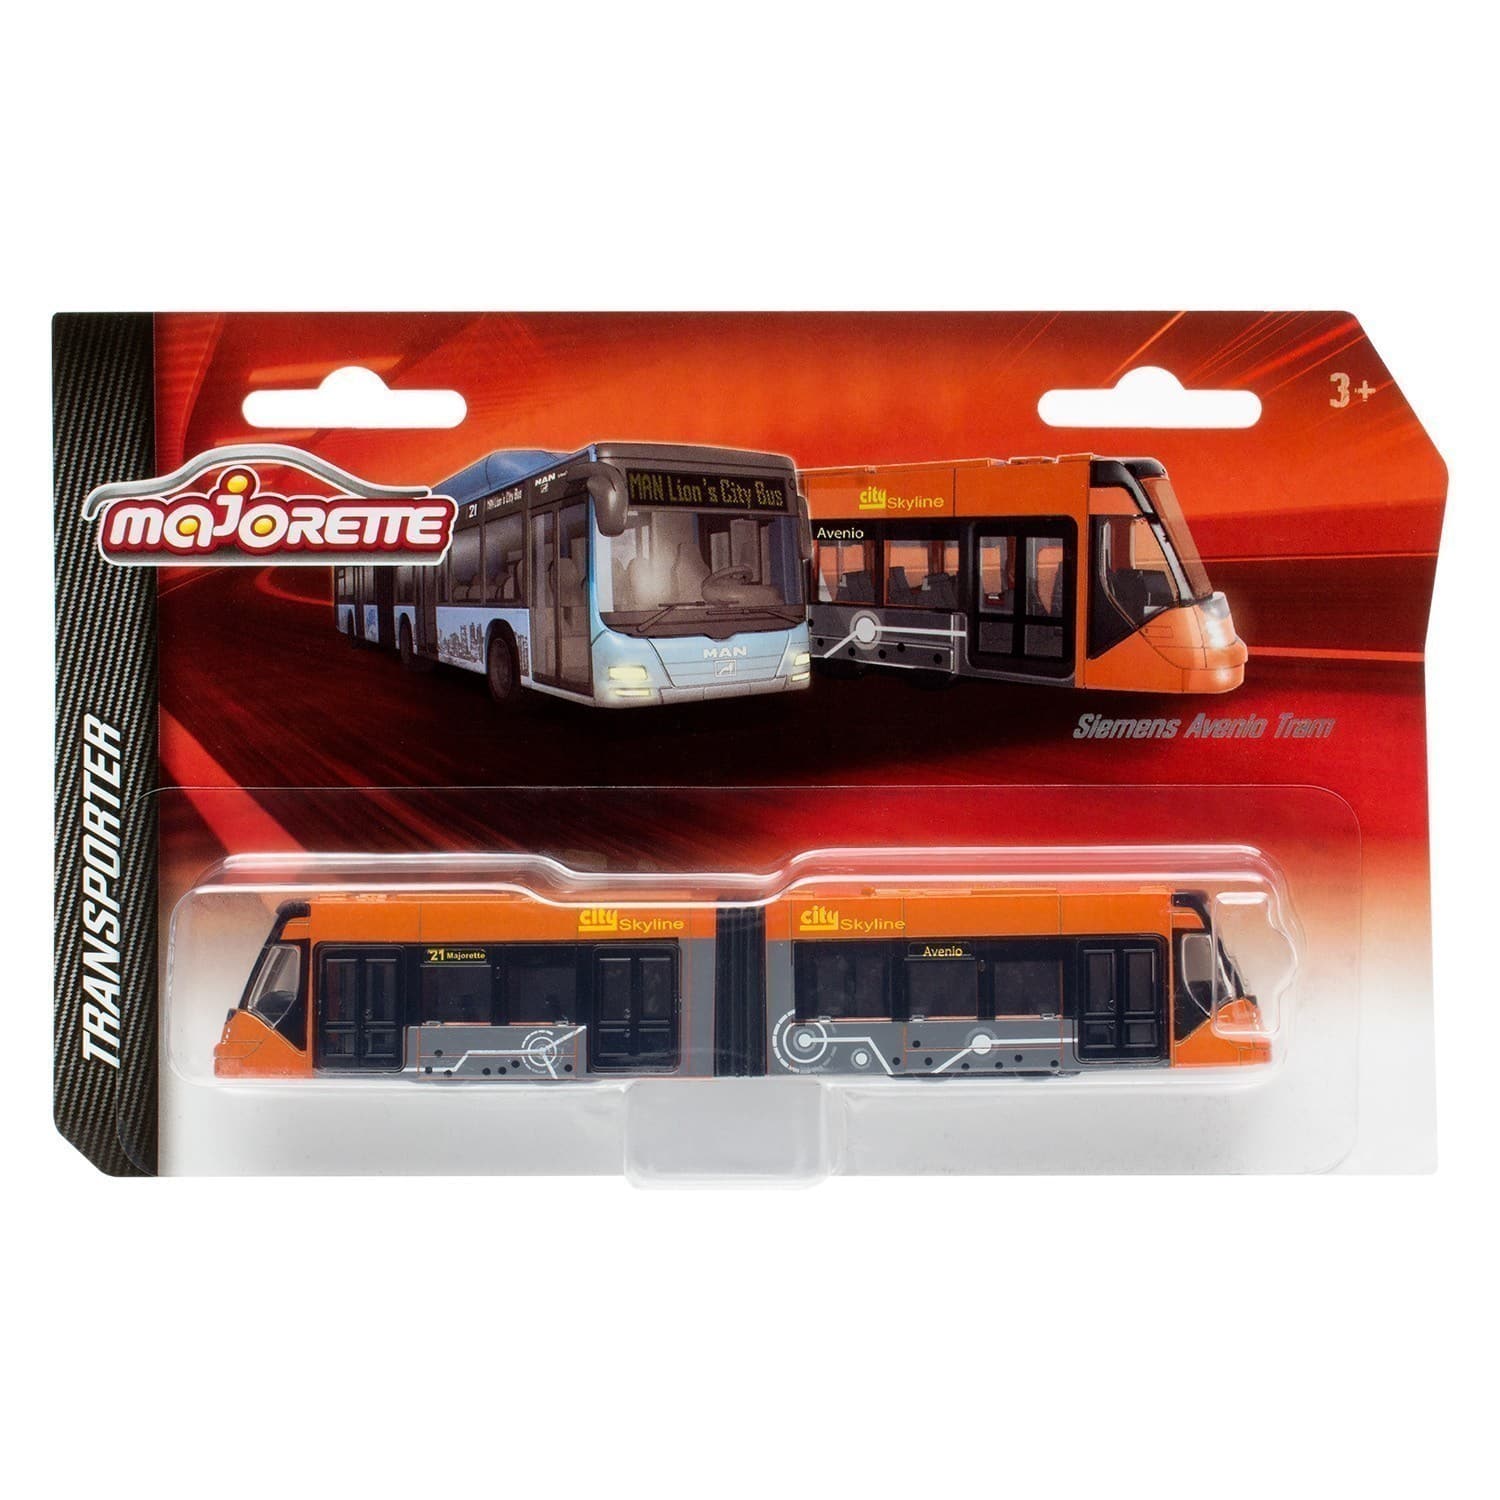 Majorette - Die-Cast Siemens Avenio Tram - Orange